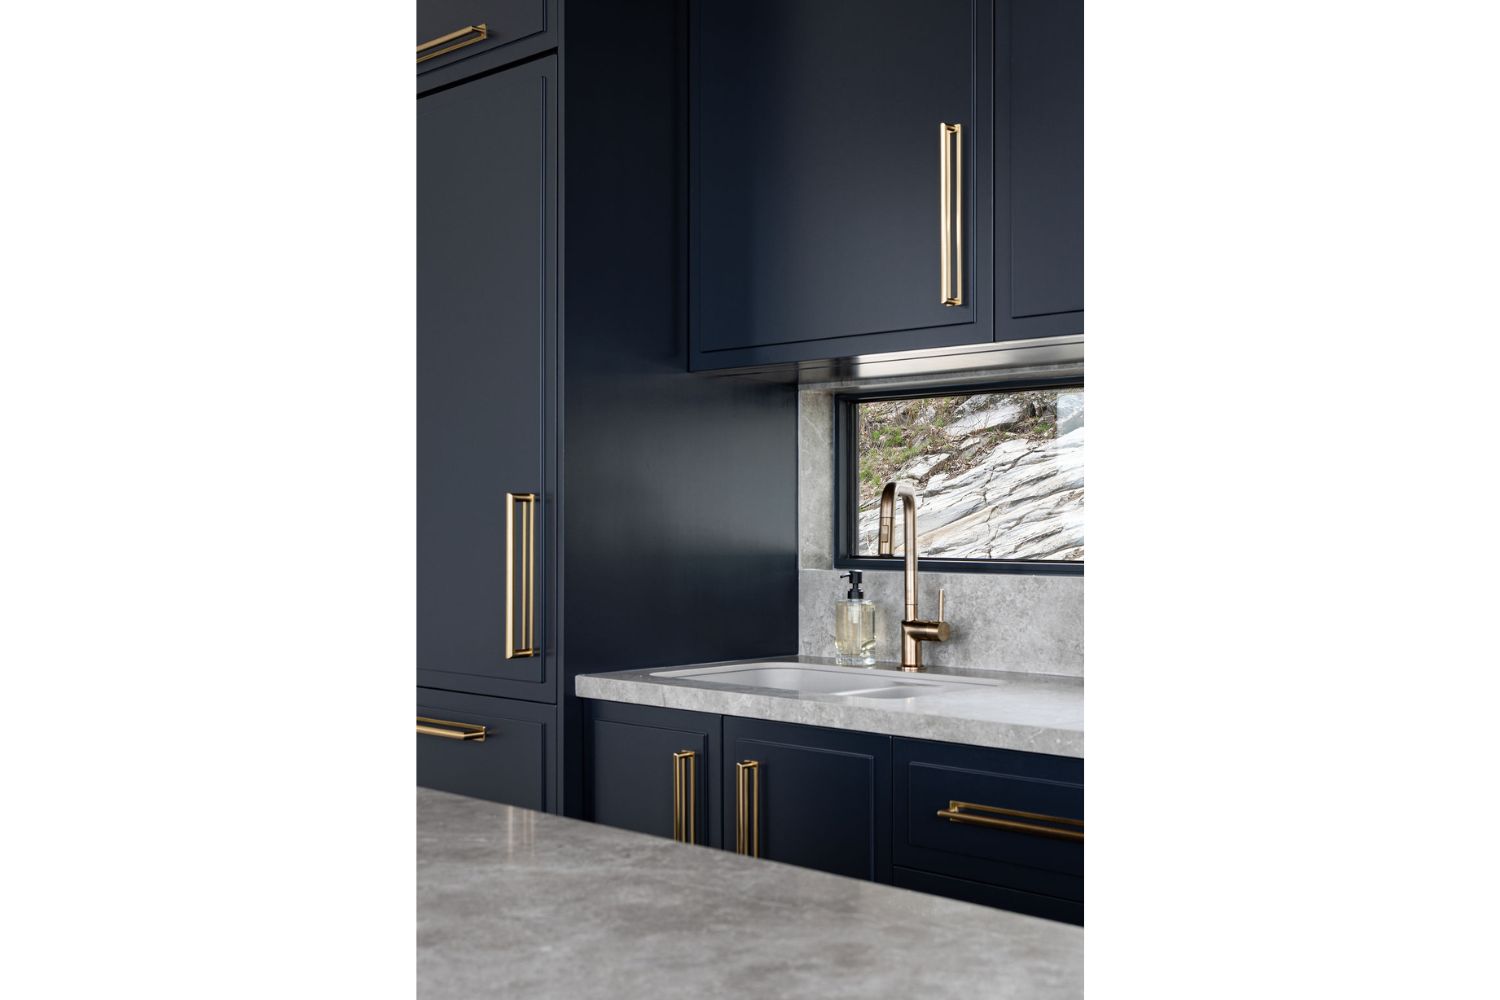 Project Cedar Rail: Custom Kitchen Cabinets And Sink